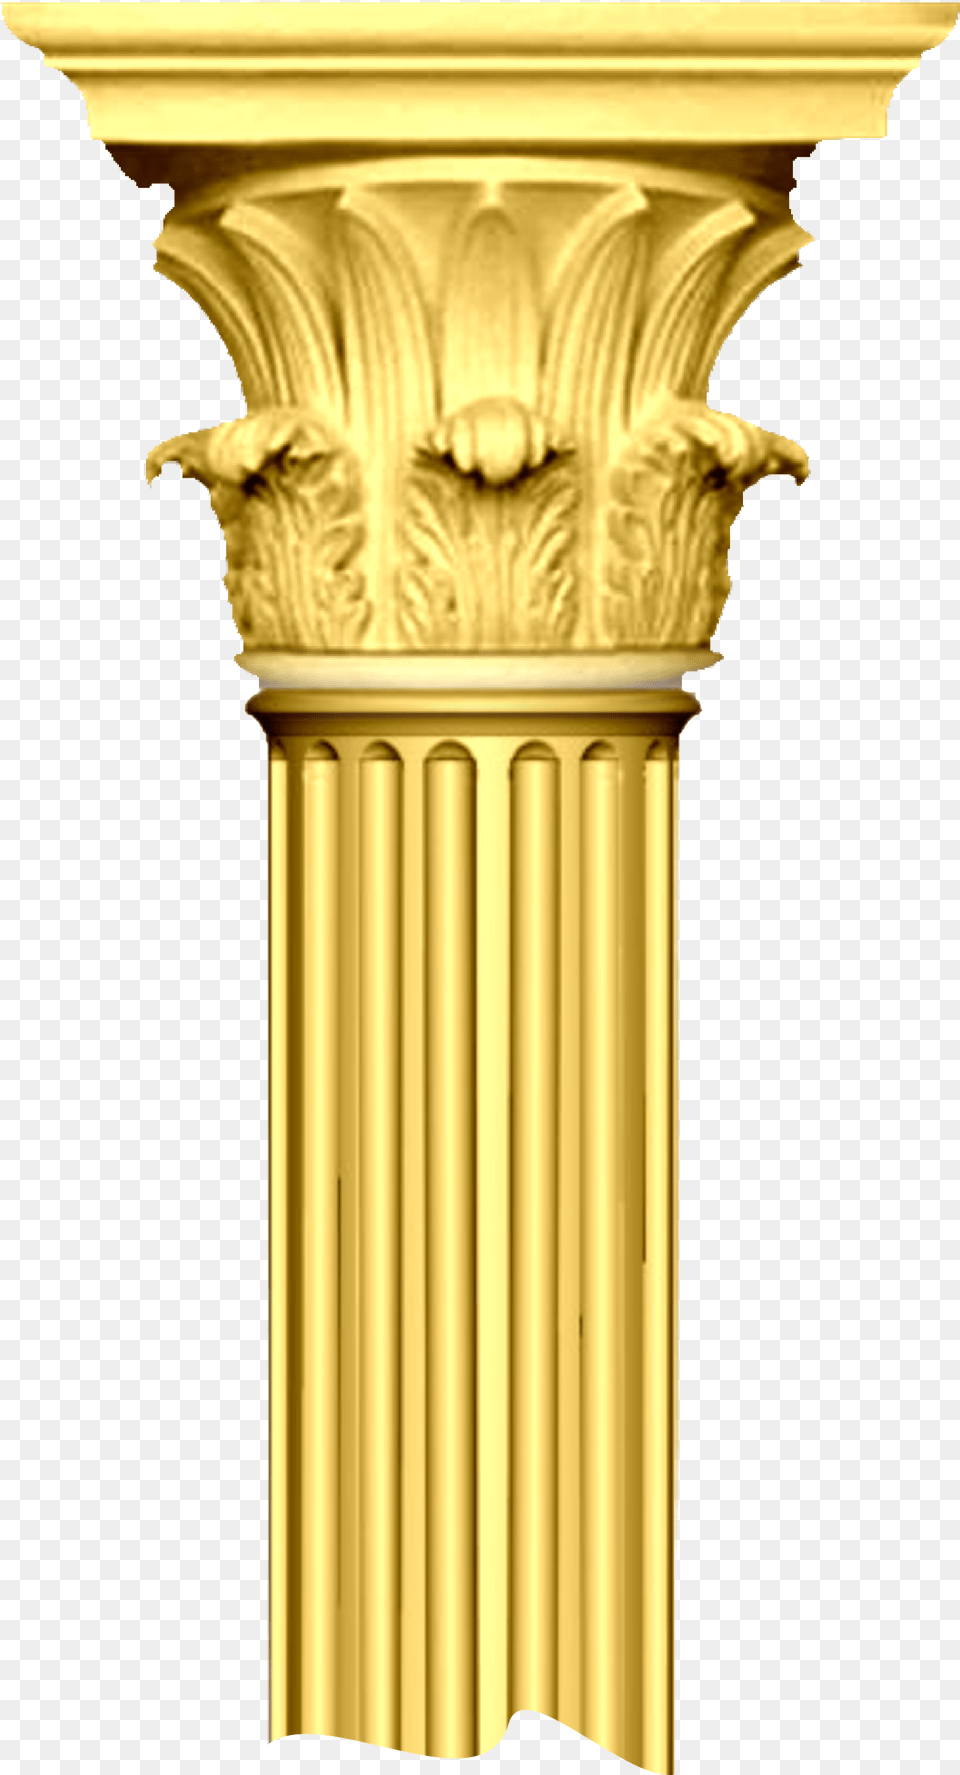 Download Gold Pillar Chapiteau Gold Pillar Clip Art, Architecture Free Transparent Png